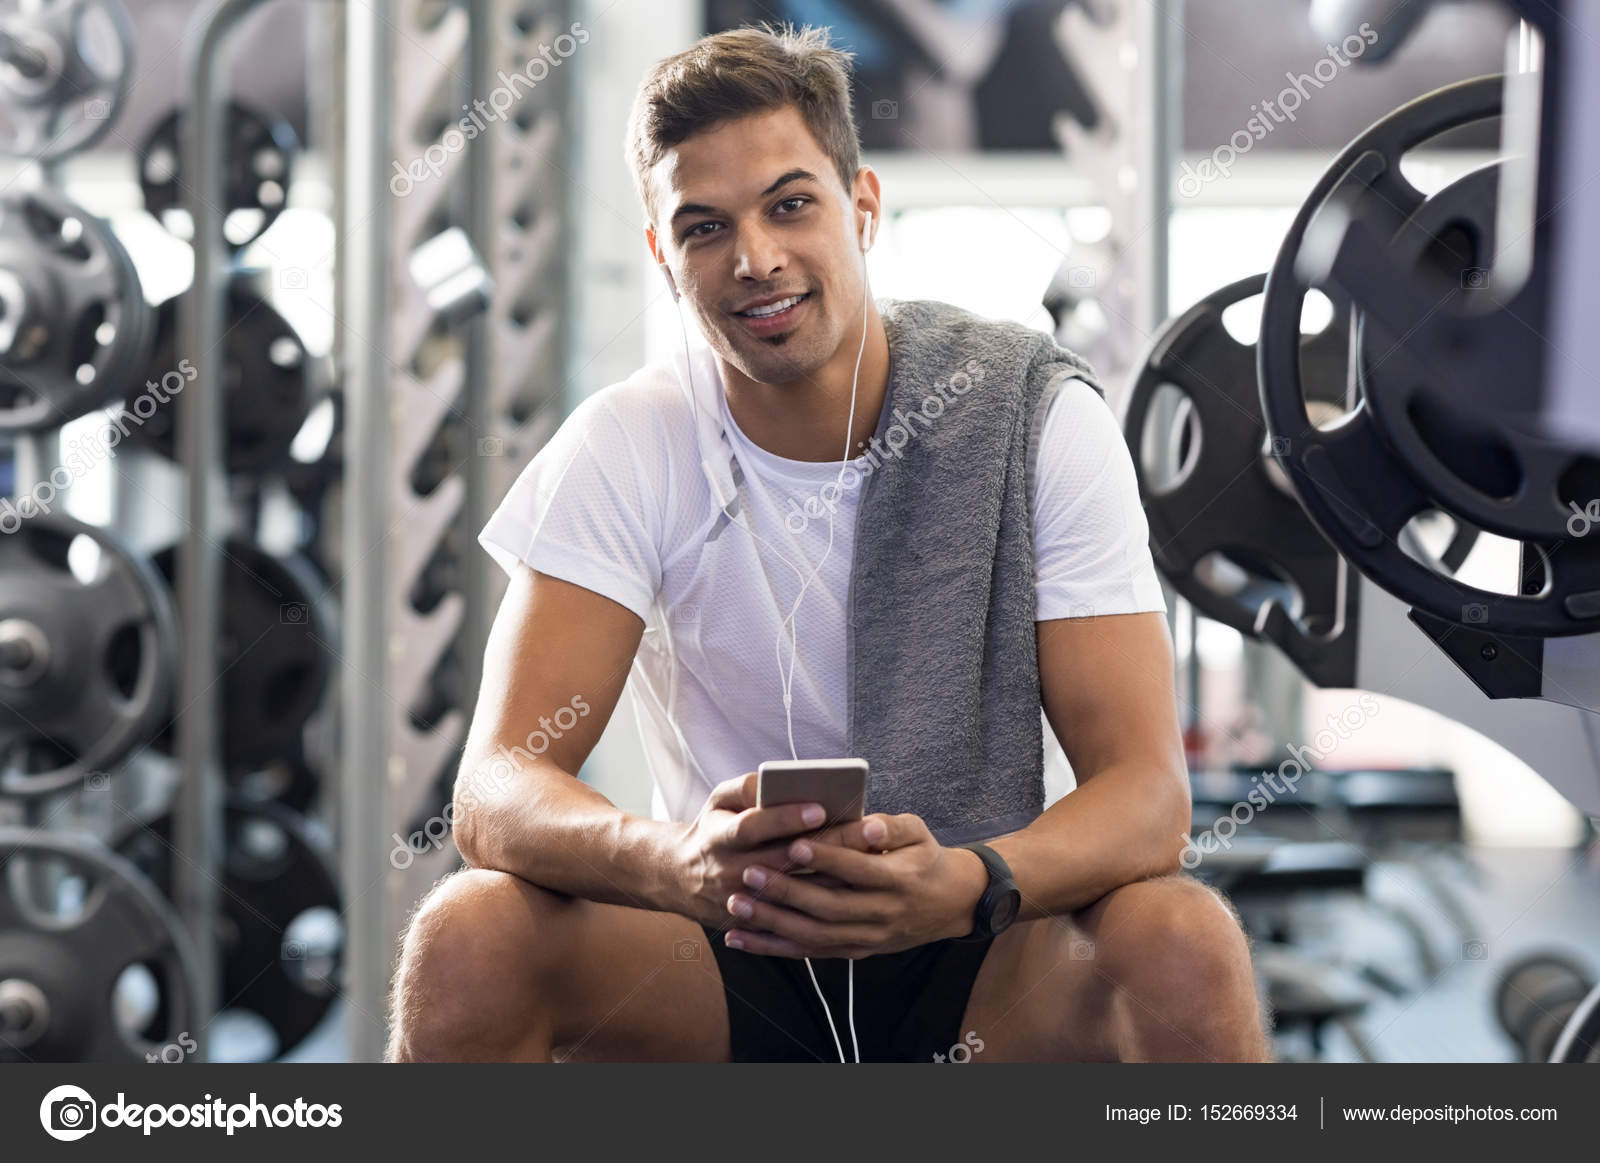 Healthy guy at gym-Healthy guy at gym